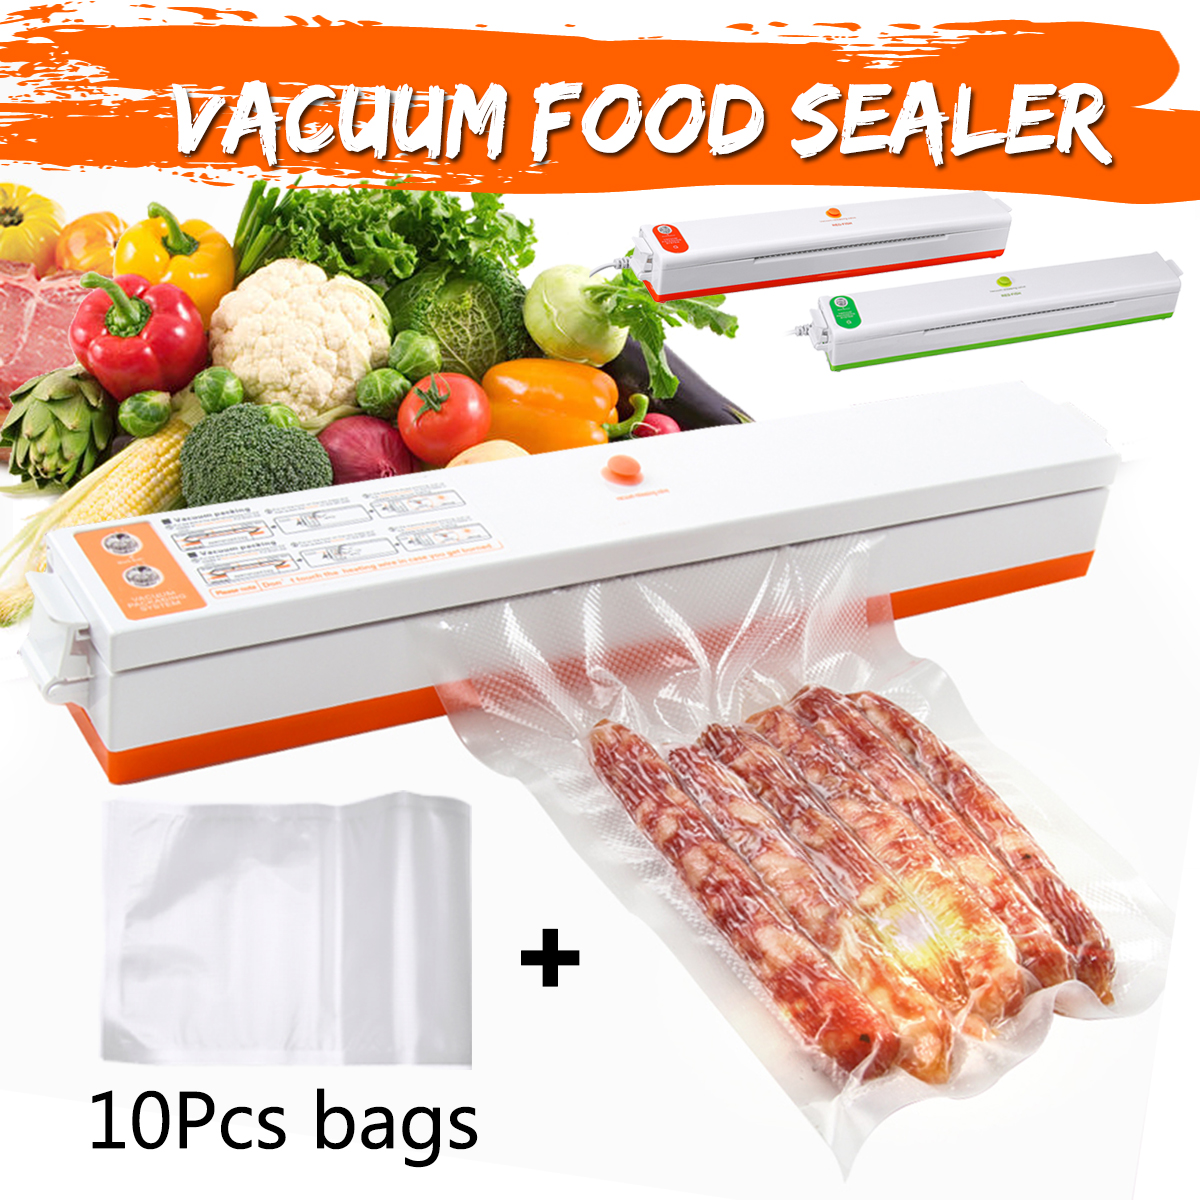 100W-220V-Electric-Vacuum-Food-Sealer-Packaging-Machine-Home-Film-Sealer-1420122-2